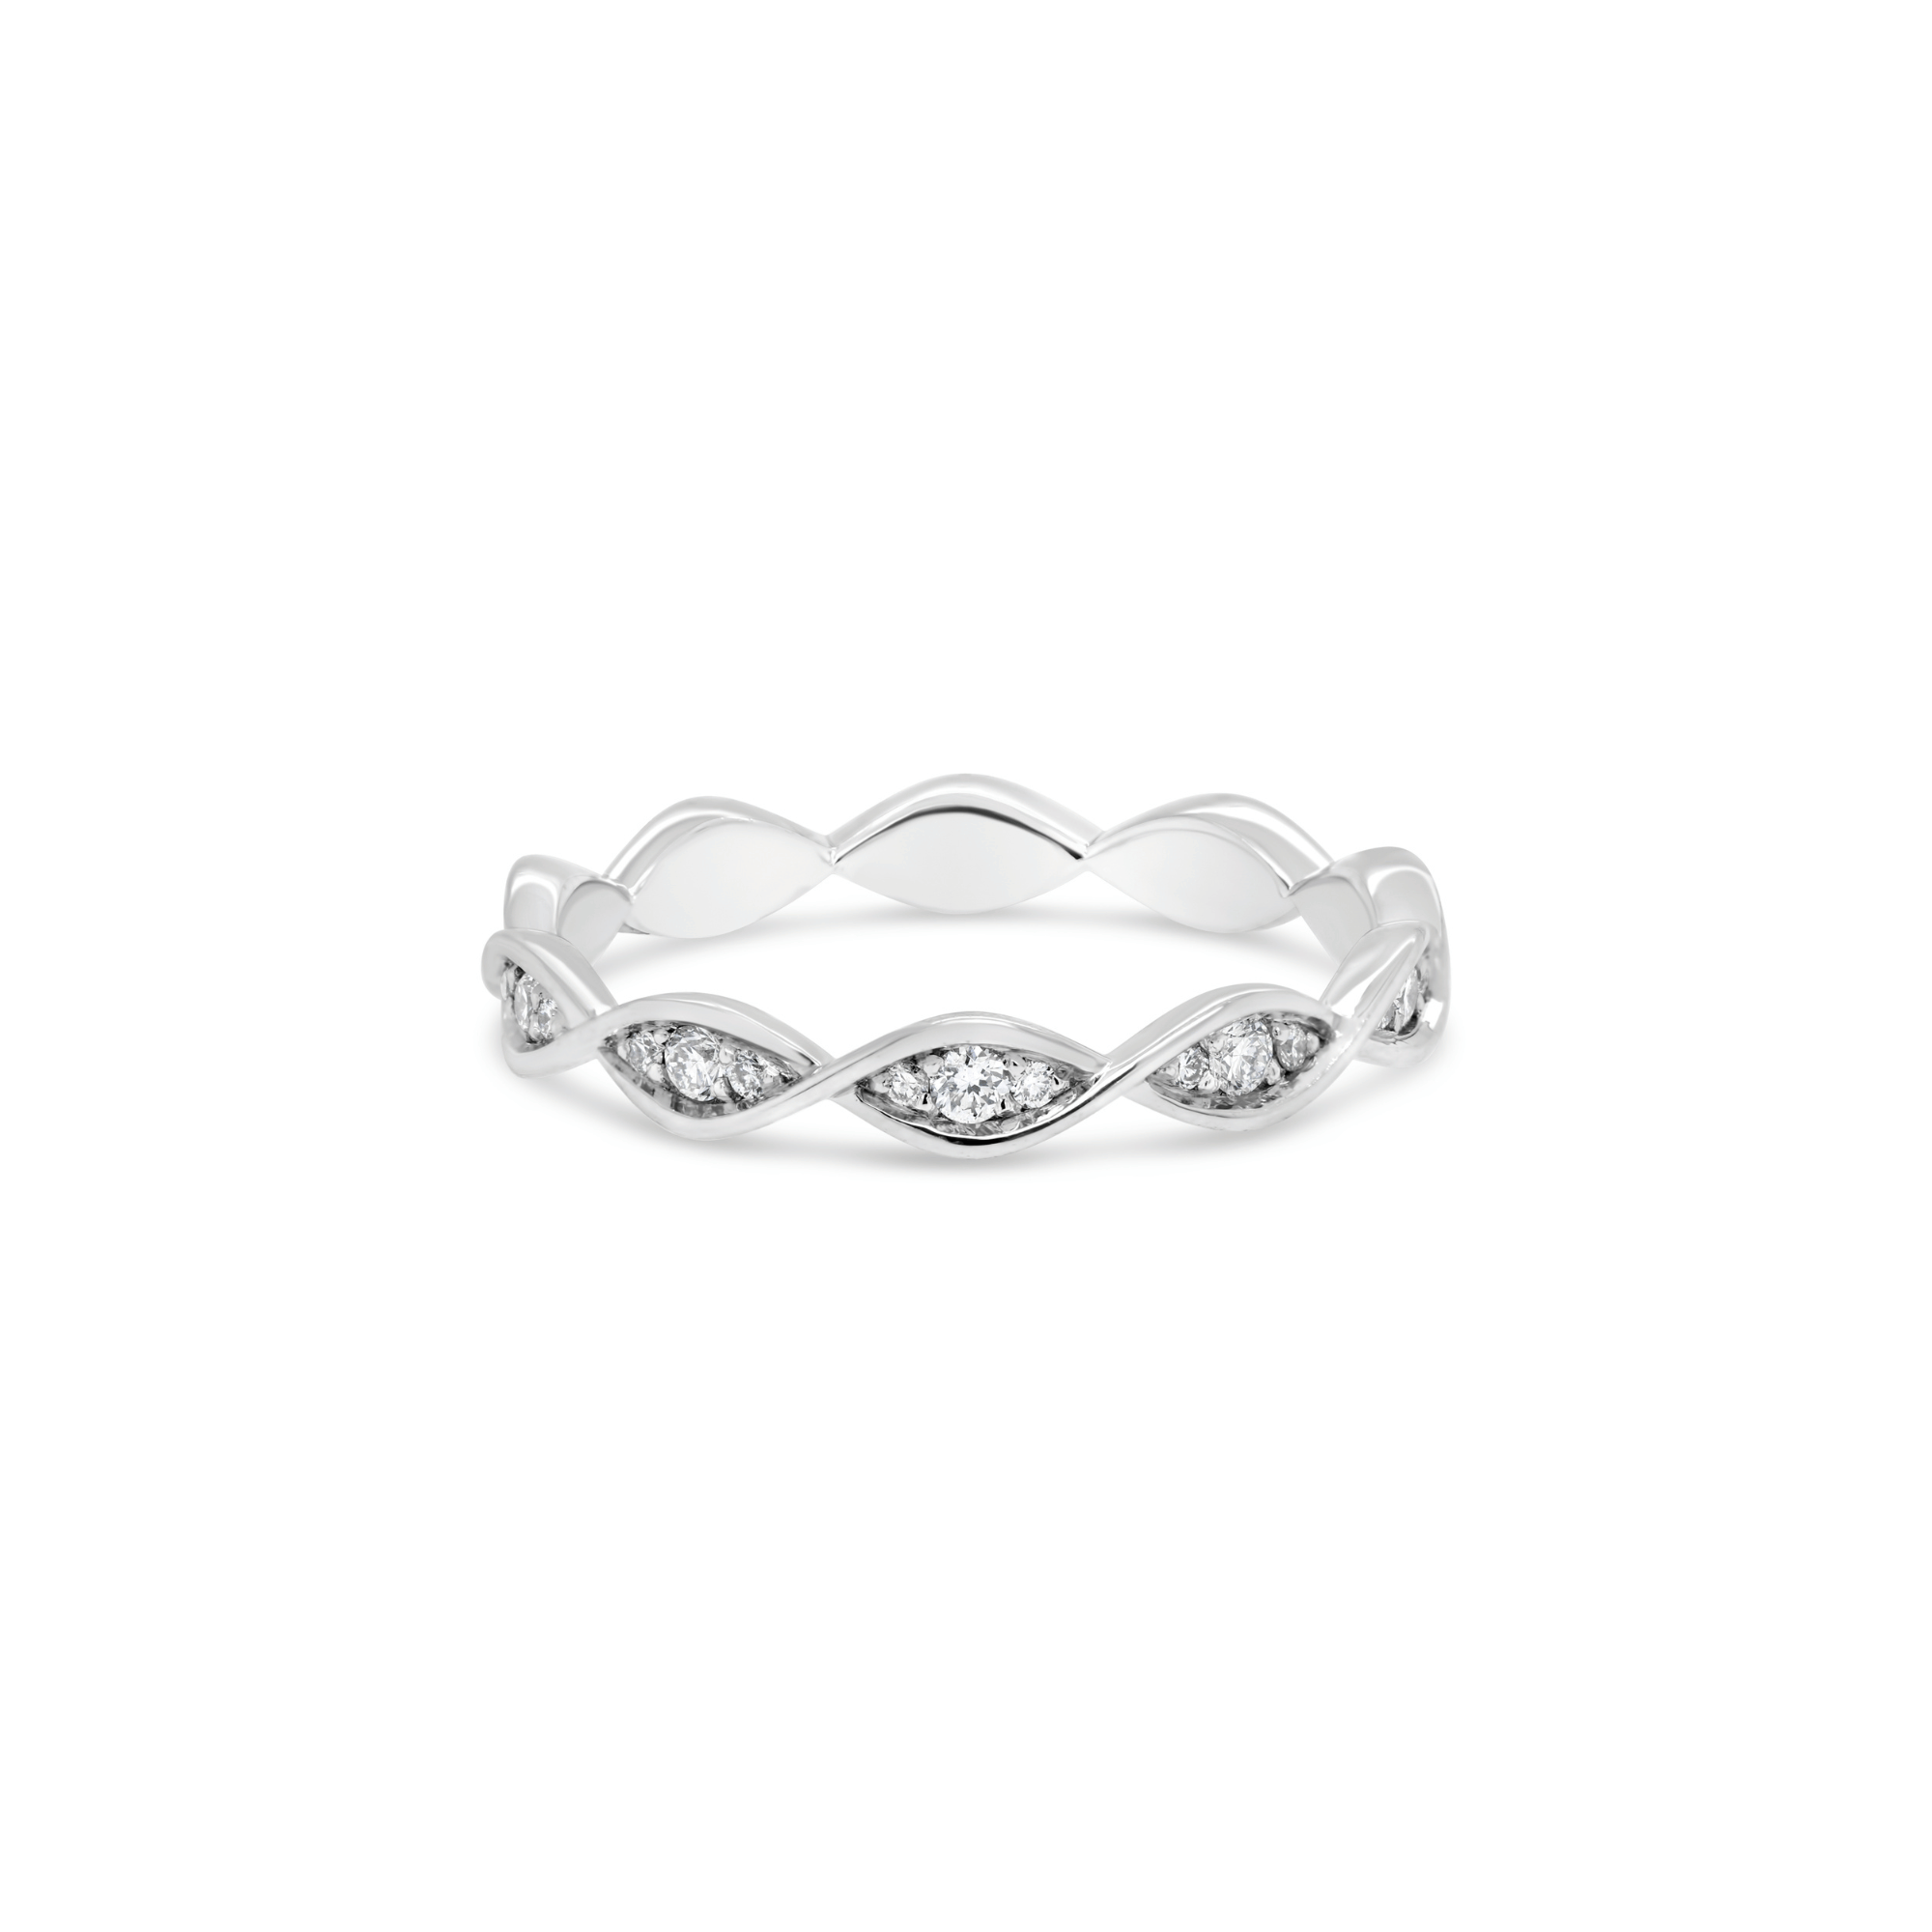 White gold & diamond ring